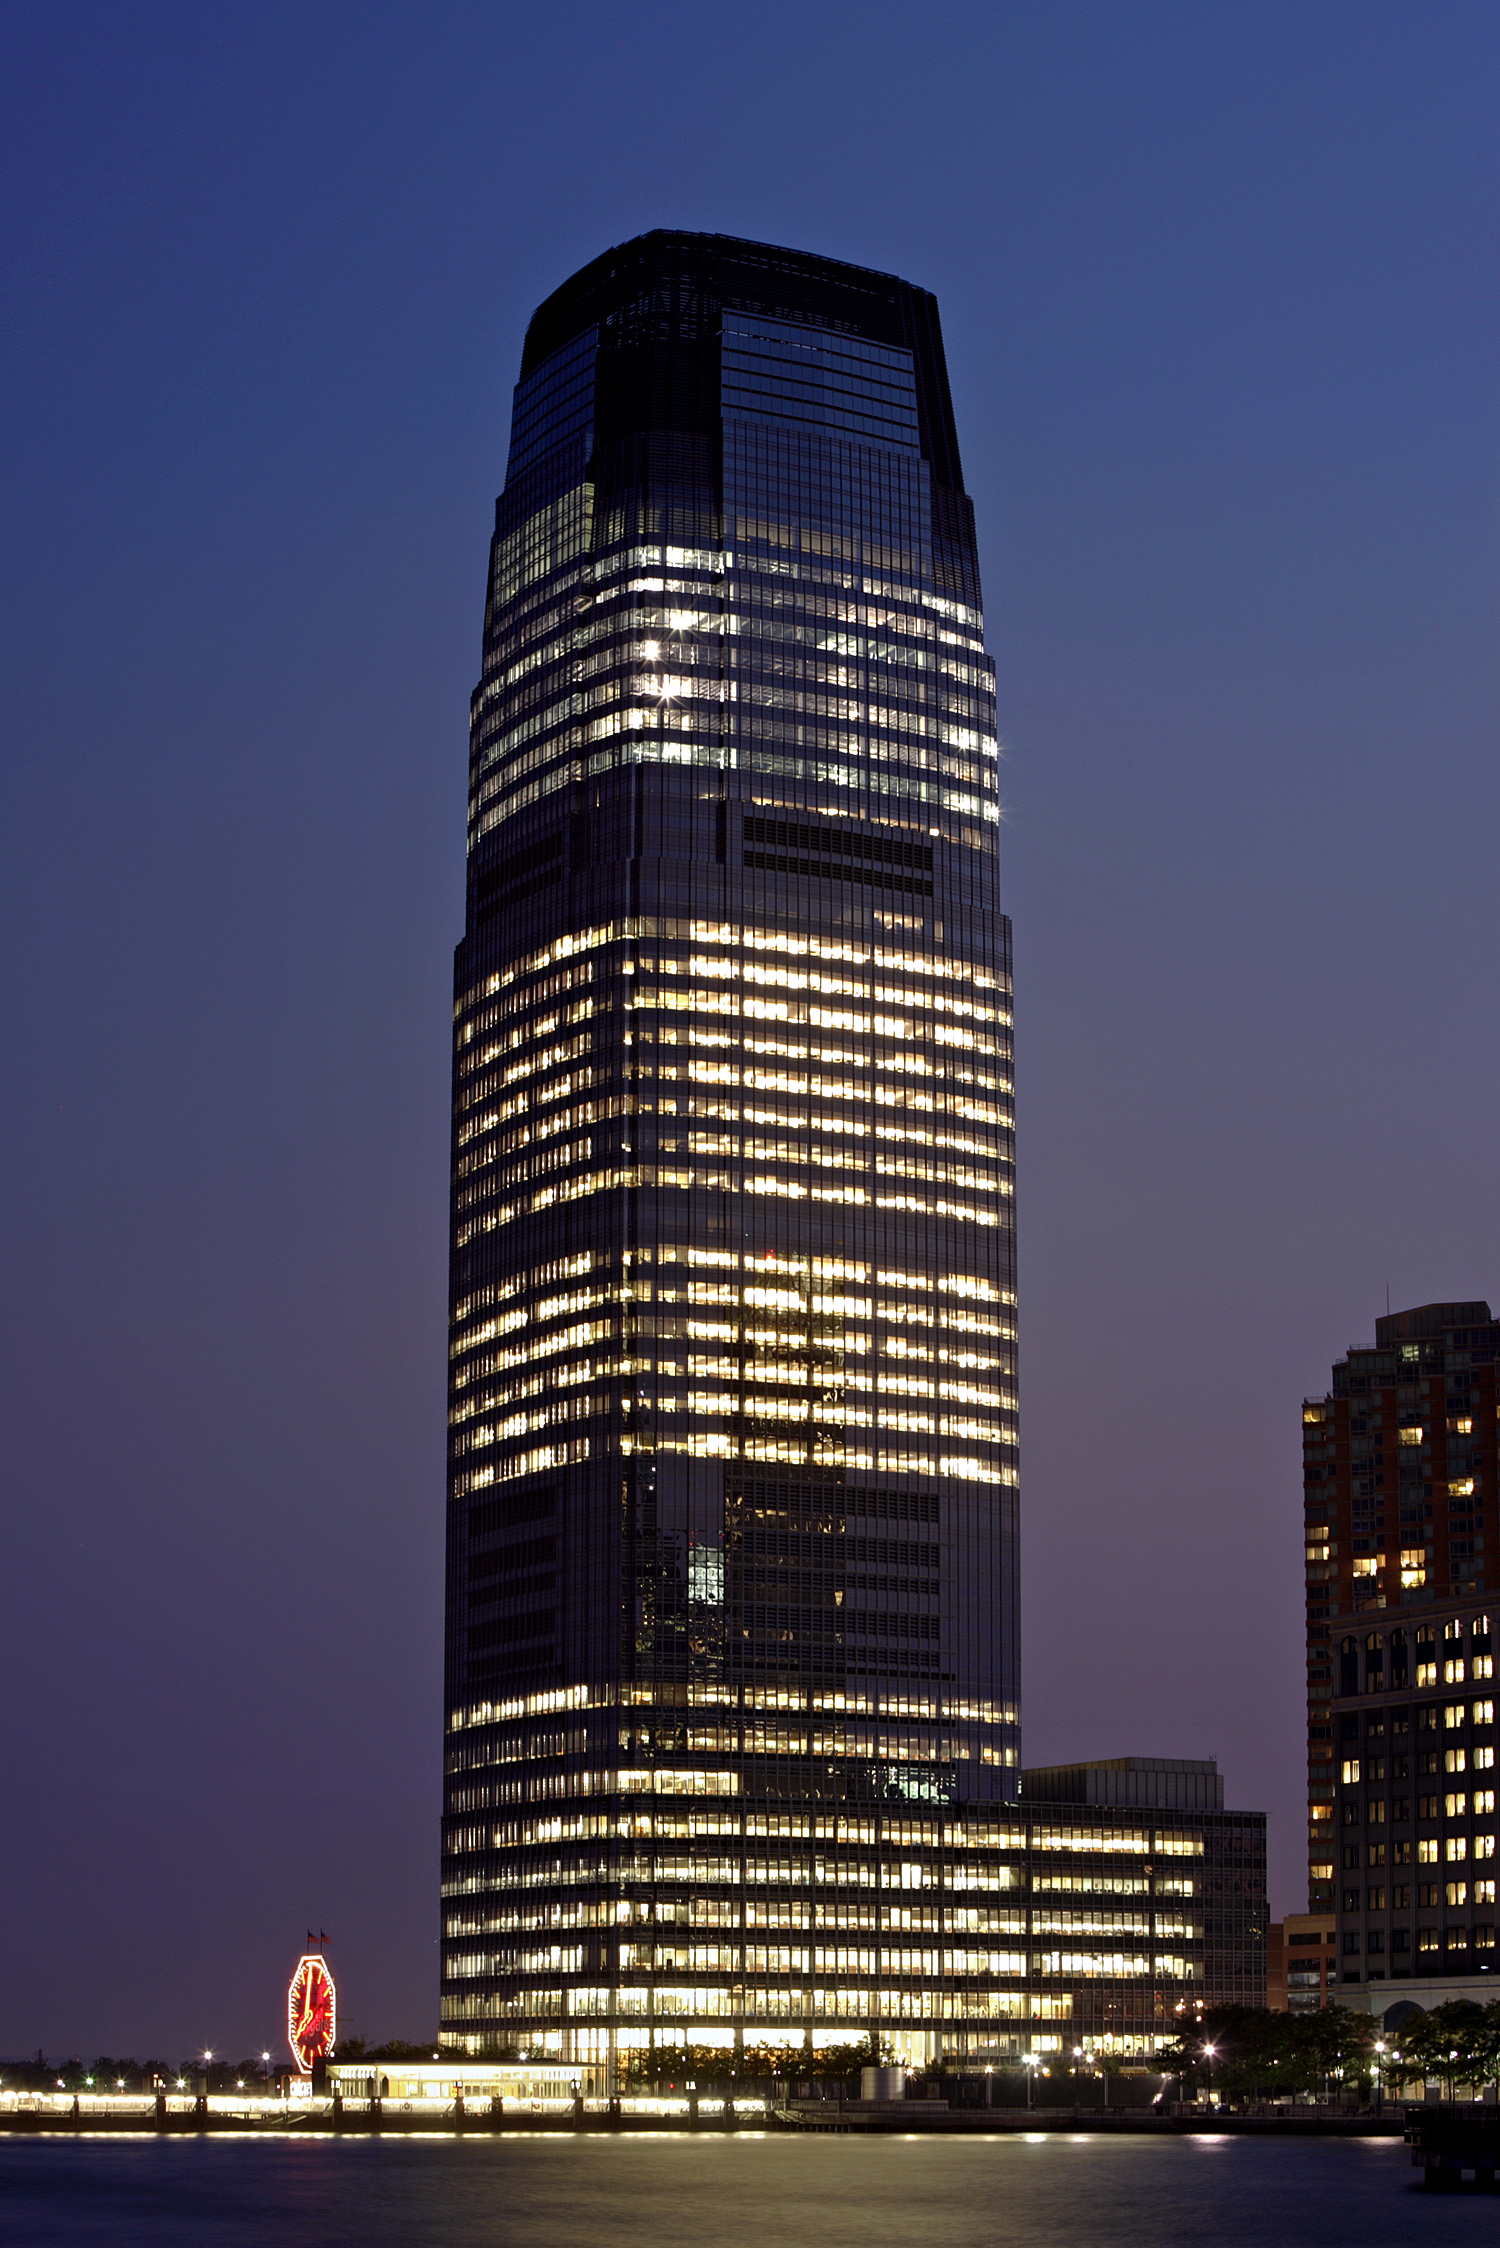 Goldman Sachs Tower, Jersey City - Night view from Hyatt Hotel Pier. © Mathias Beinling